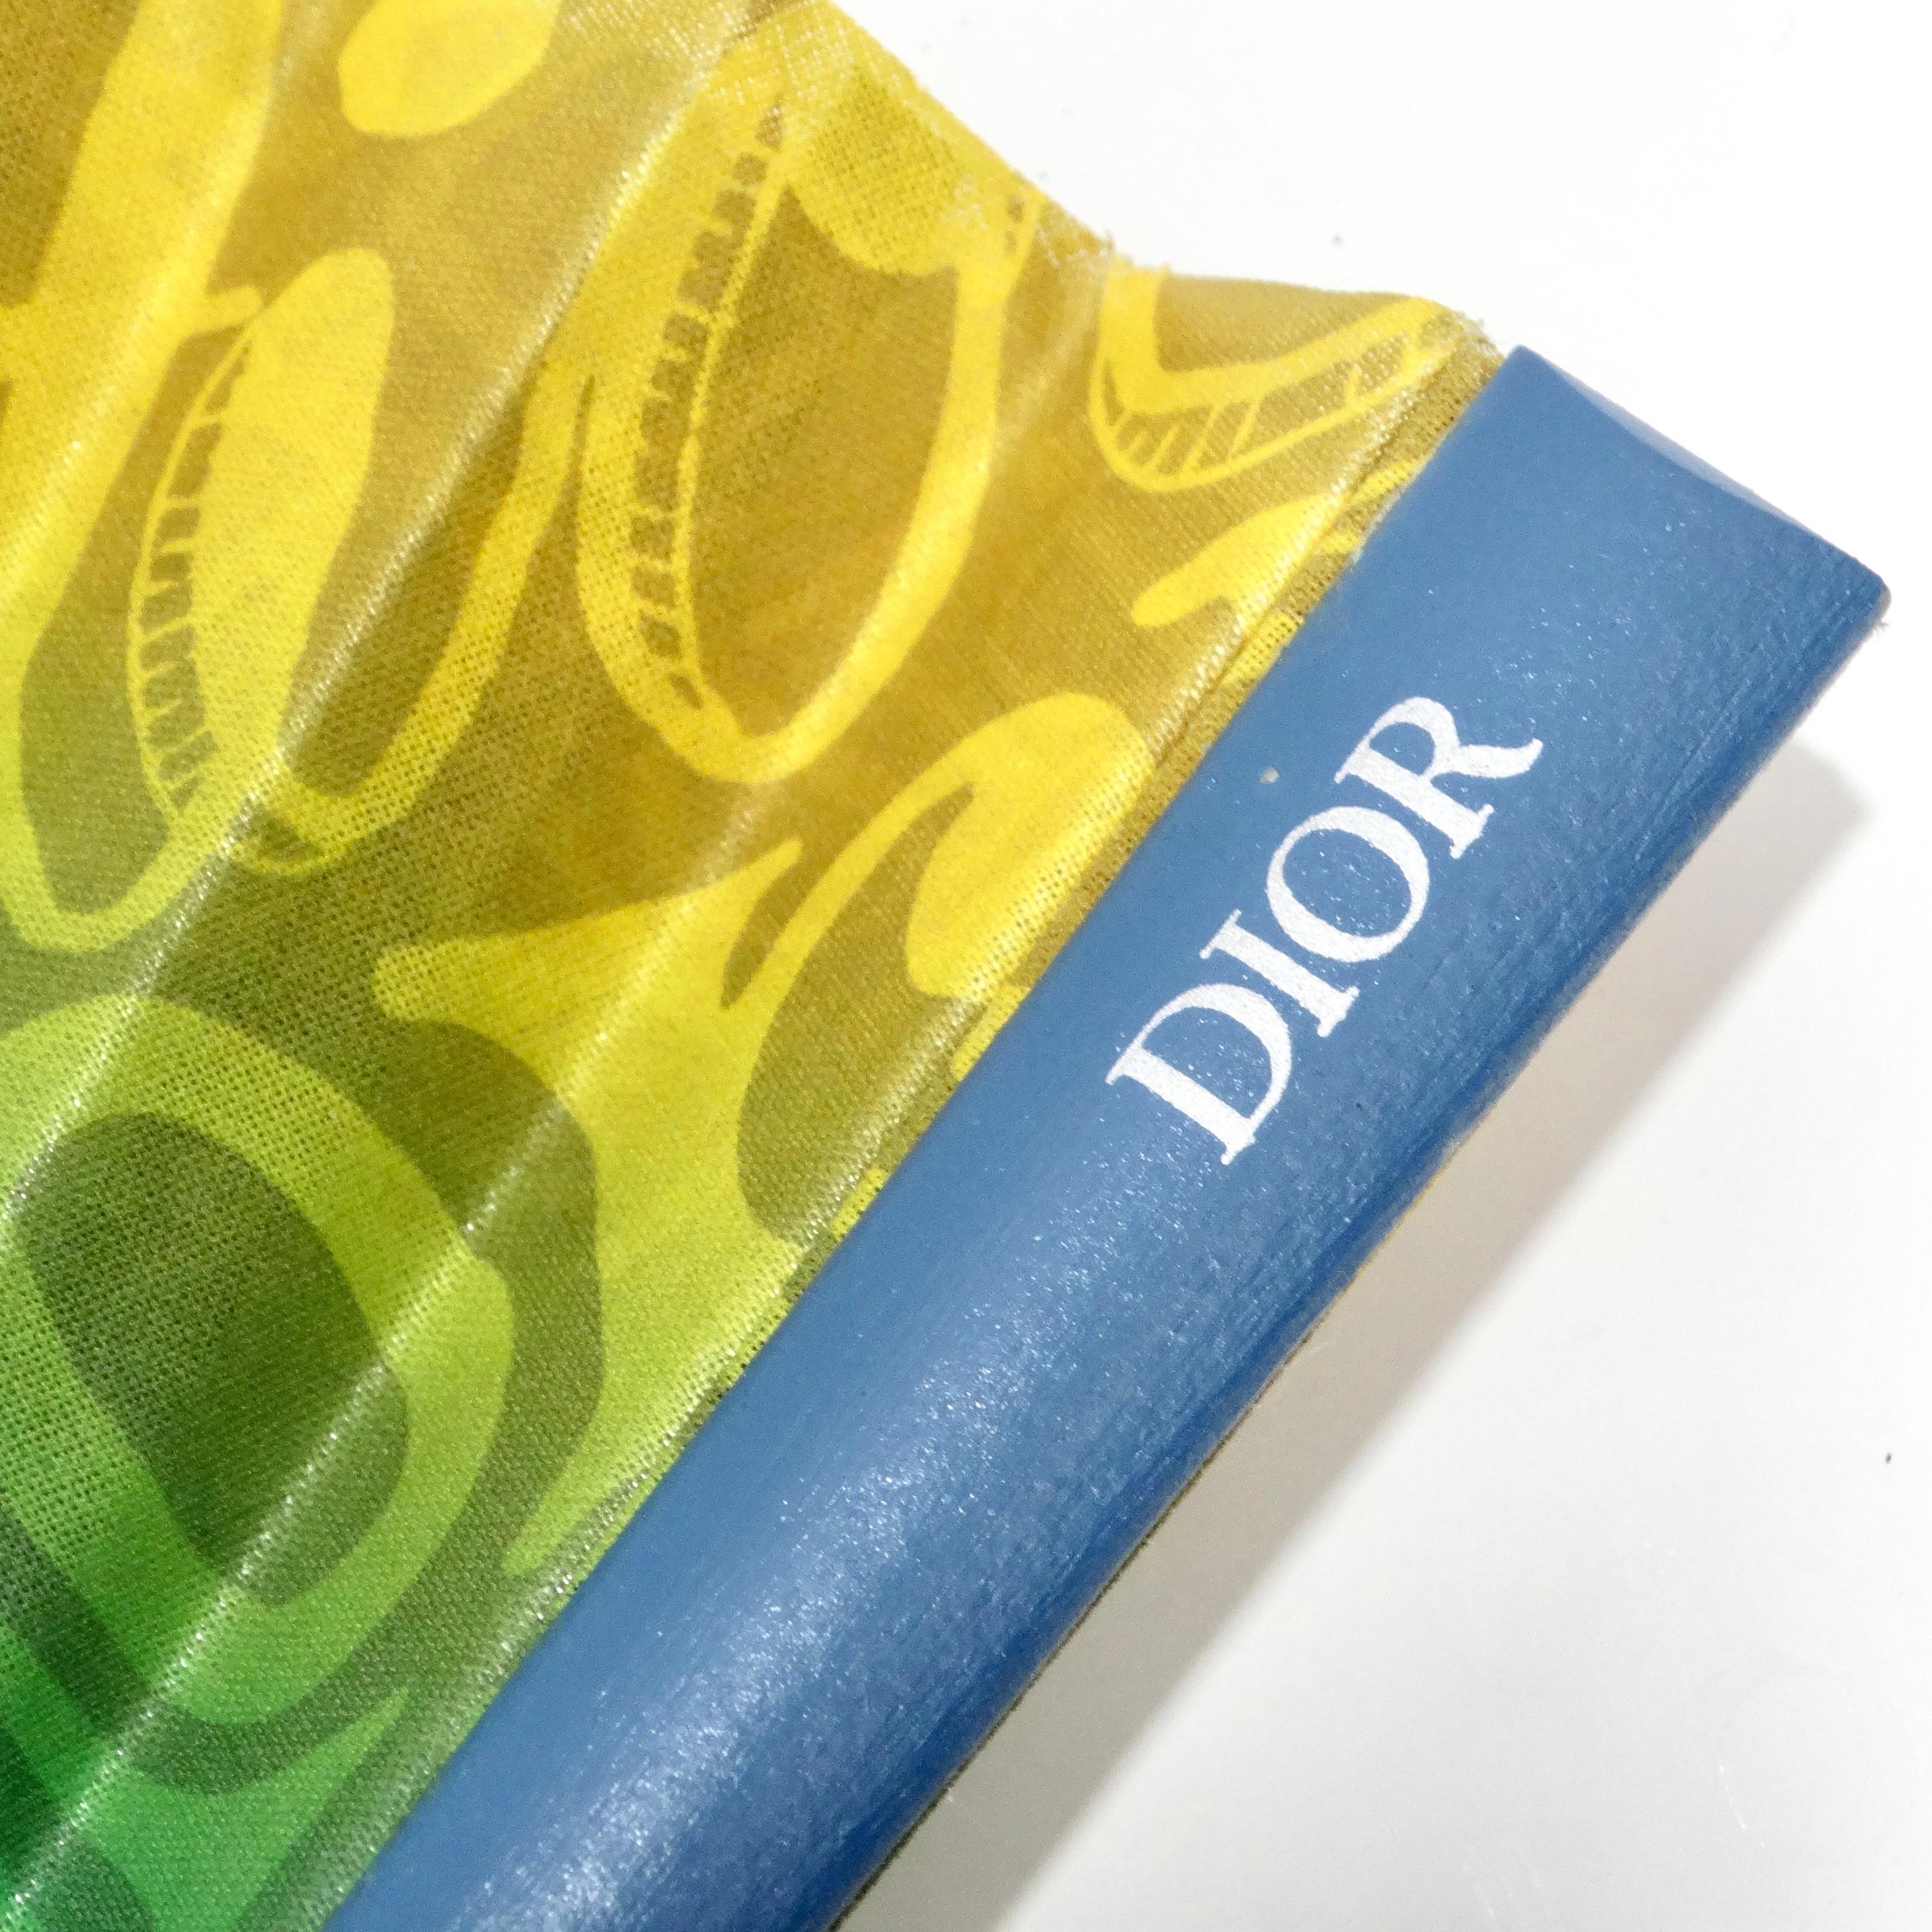 Christian Dior Eventail Foldes en vente 3